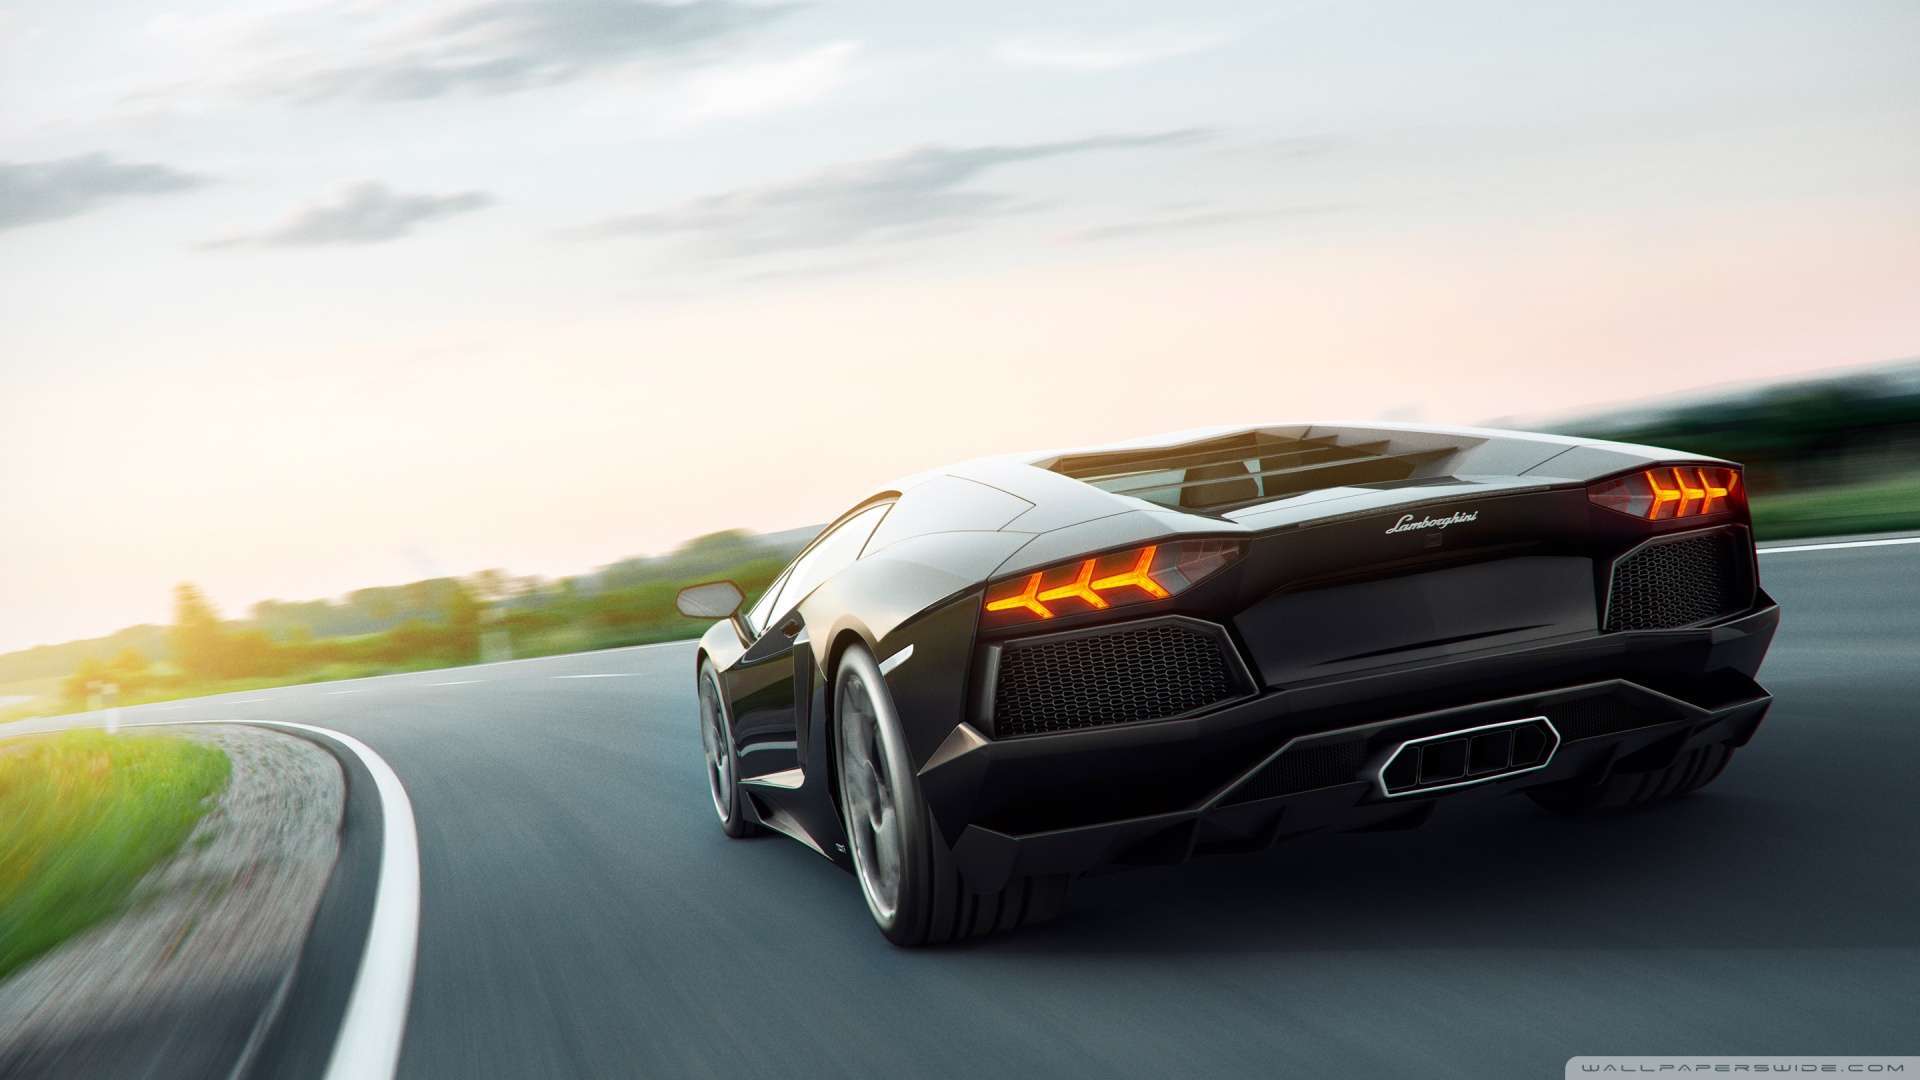 Wallpaper Lamborghini Aventador Art 1080p HD Upload At